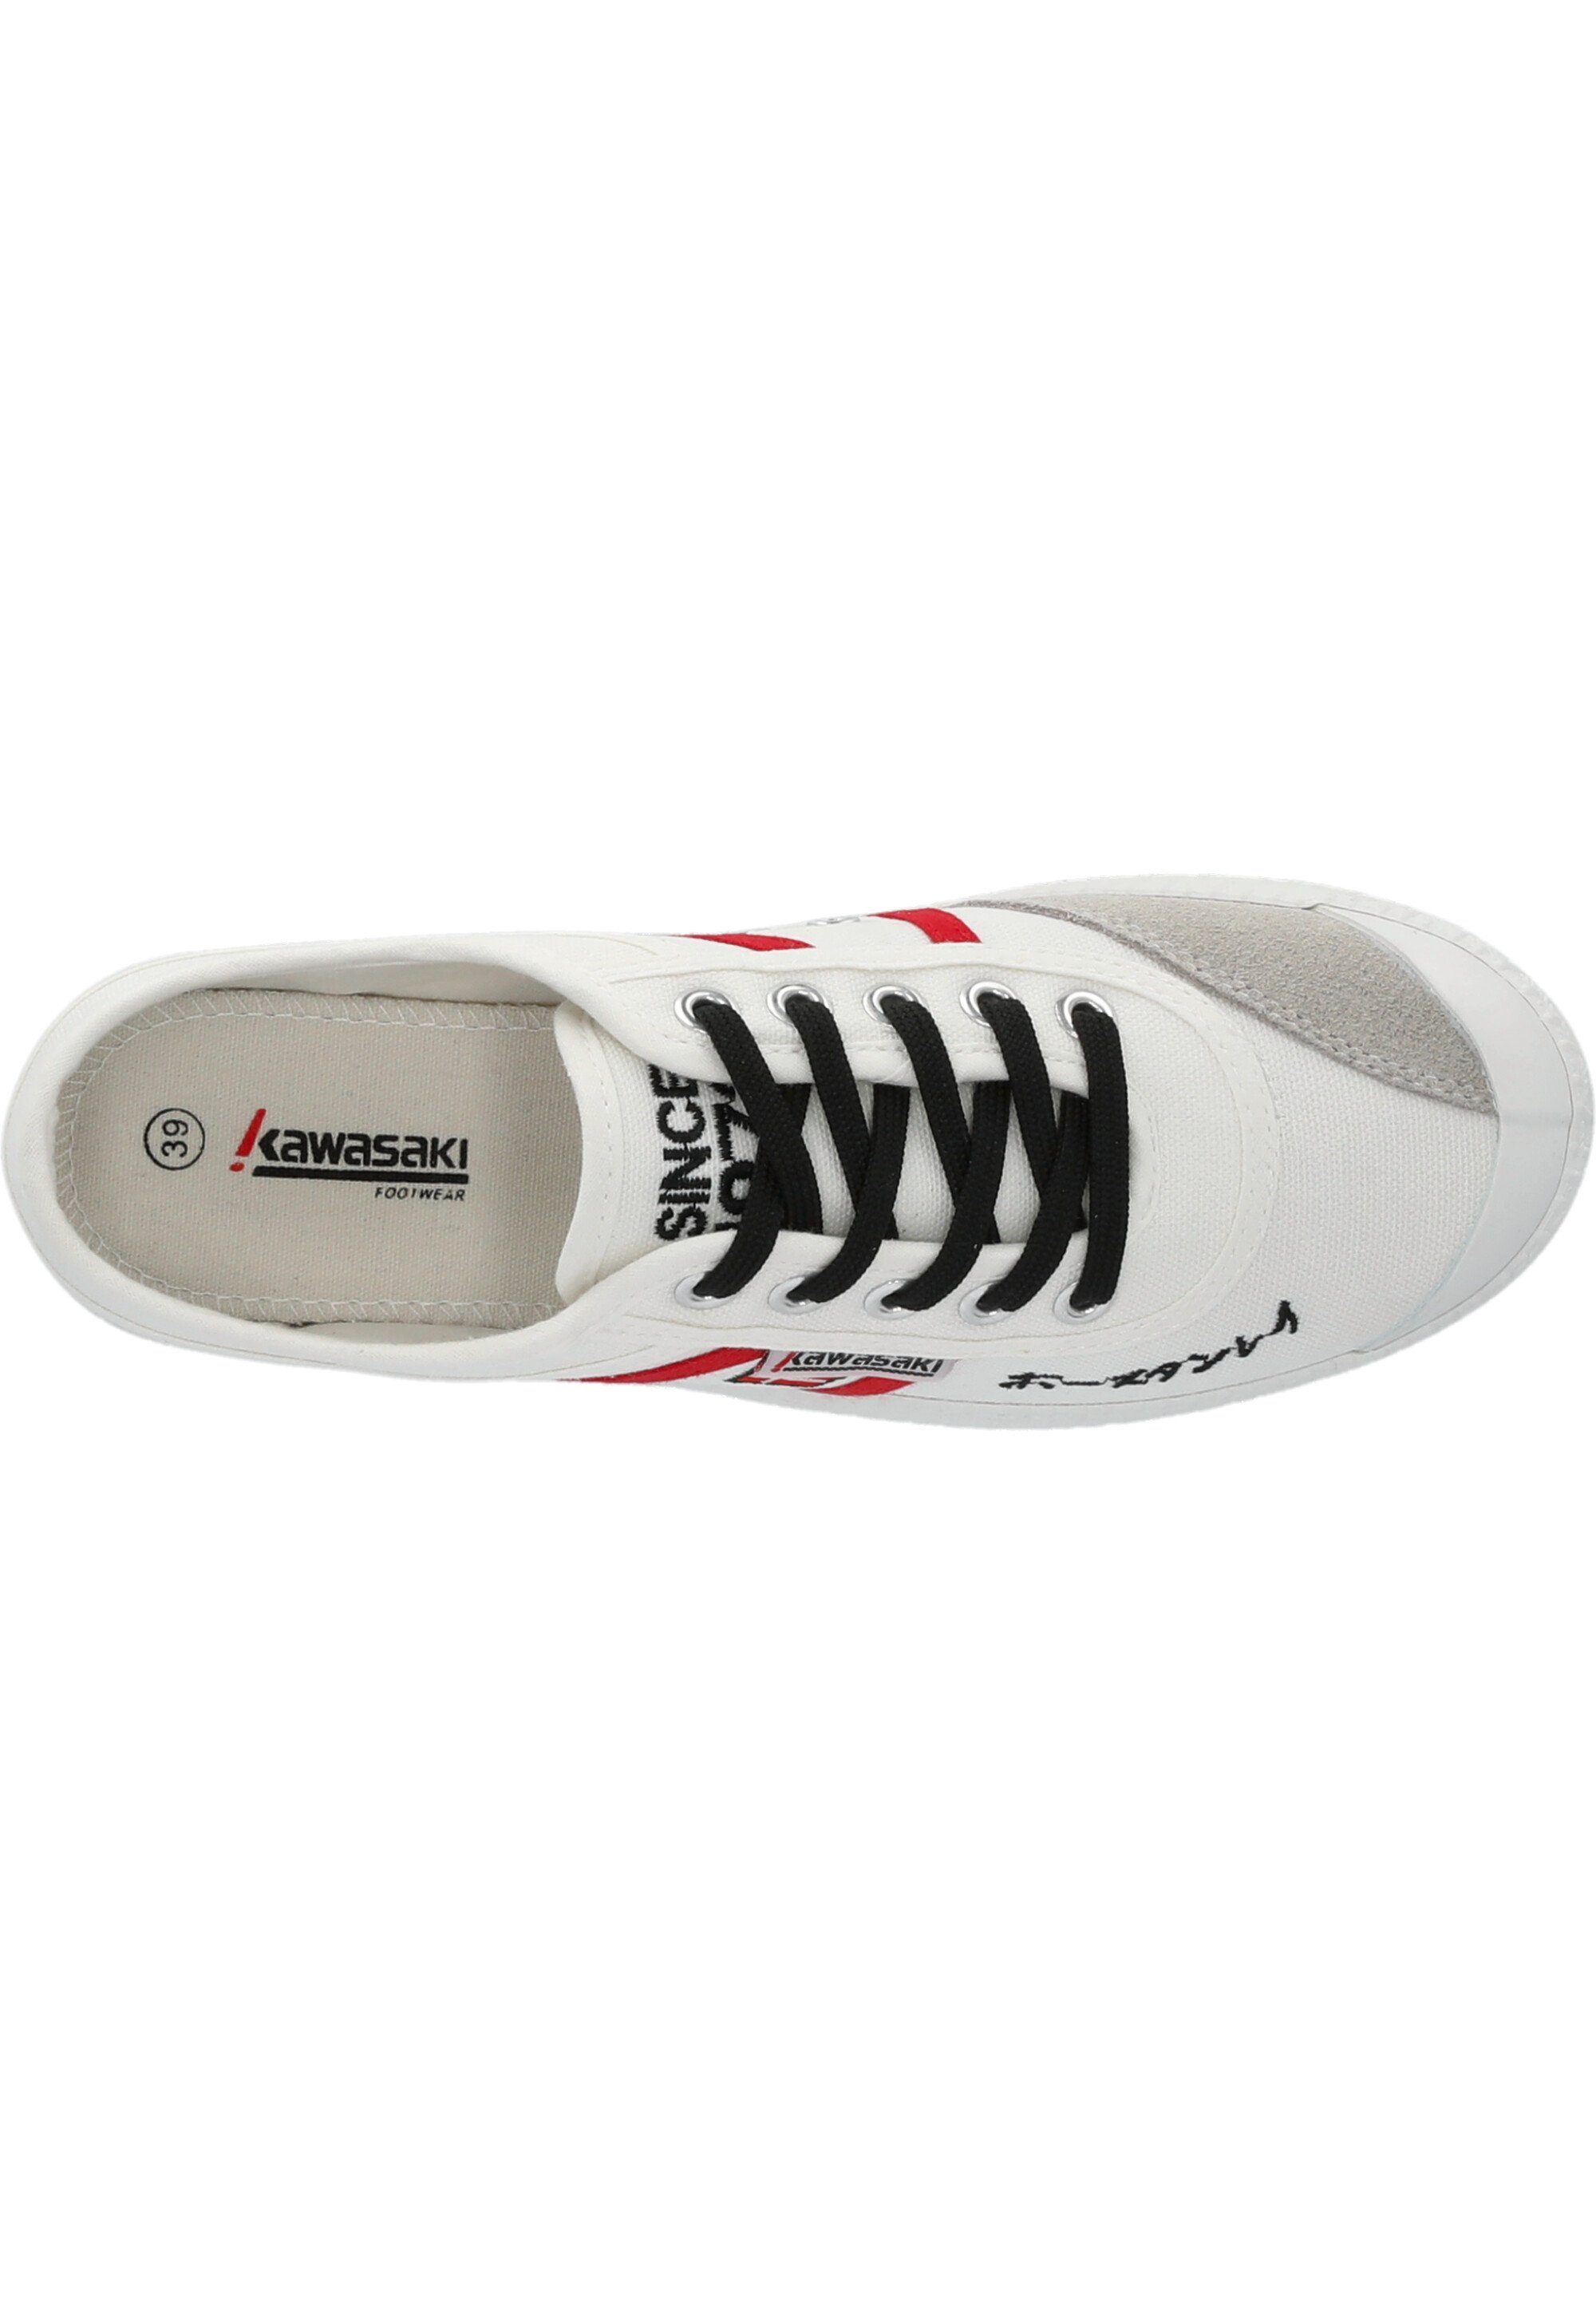 trendigen Kawasaki im weiß Retrodesign Signature Sneaker